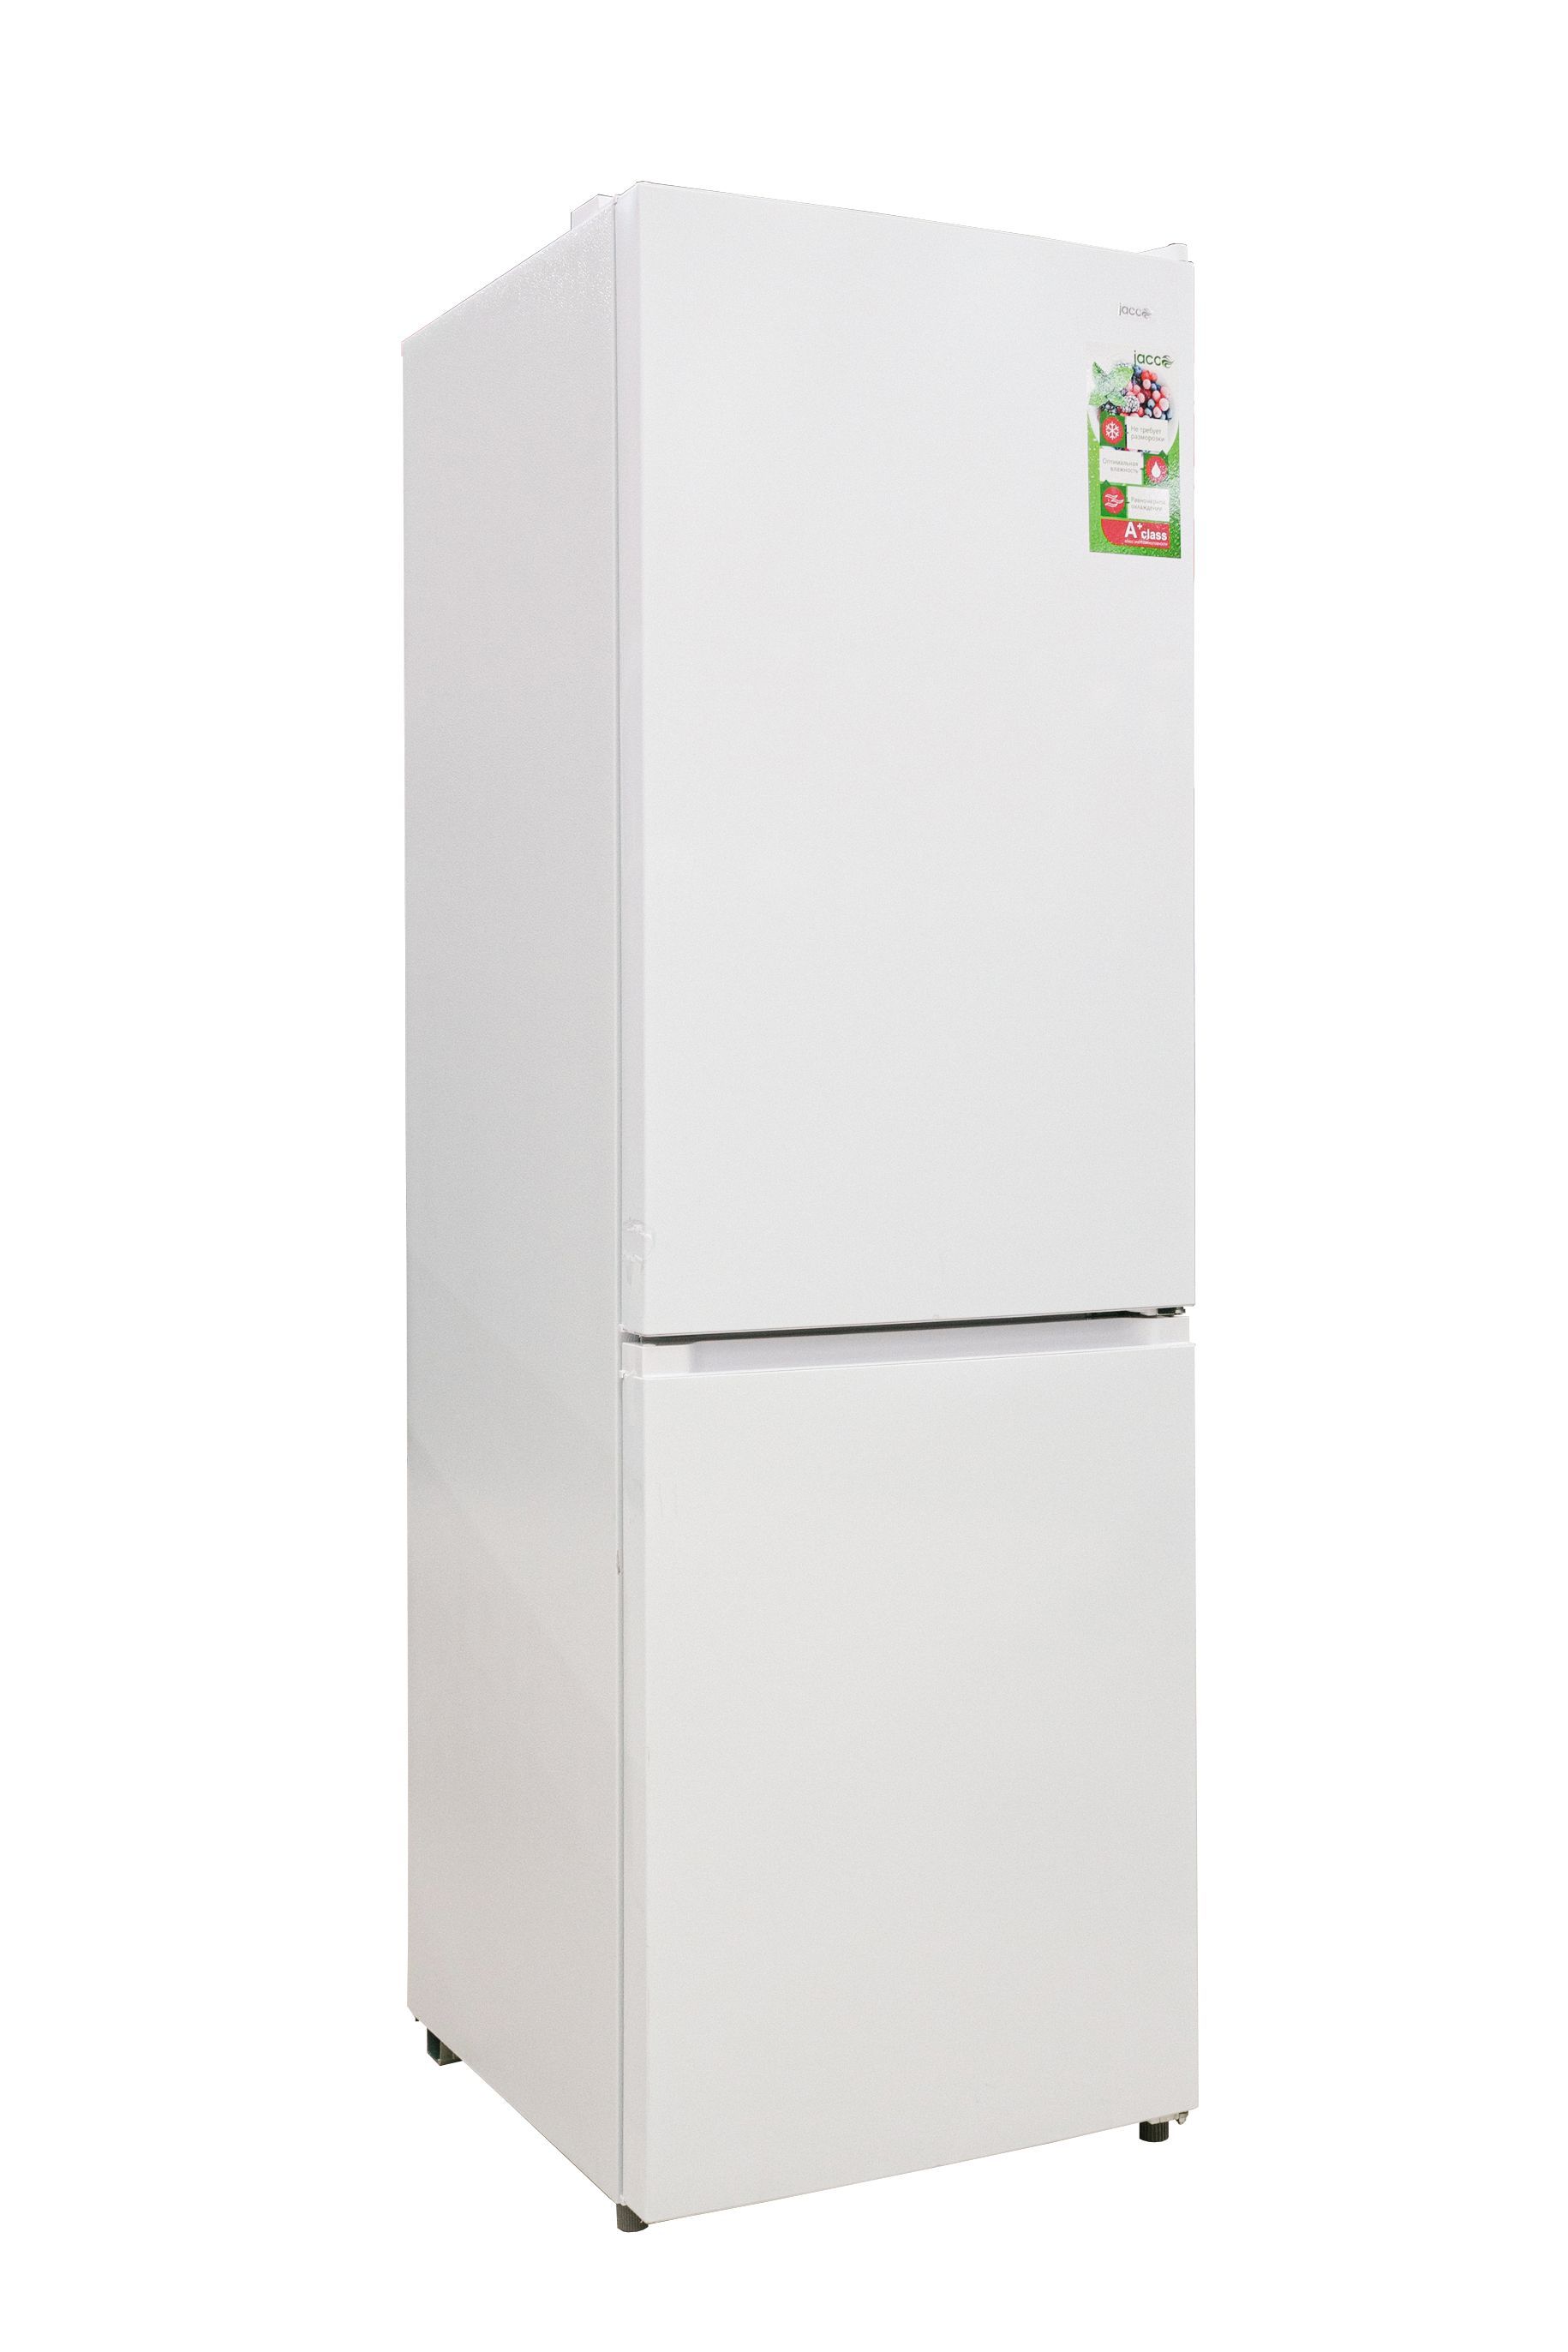 Холодильник Jacoo. Холодильник Jacoo JRF-k378 Beige. Холодильник Jacoo JRF-k378 Beige серый. Jacoo j7 Краснодар.